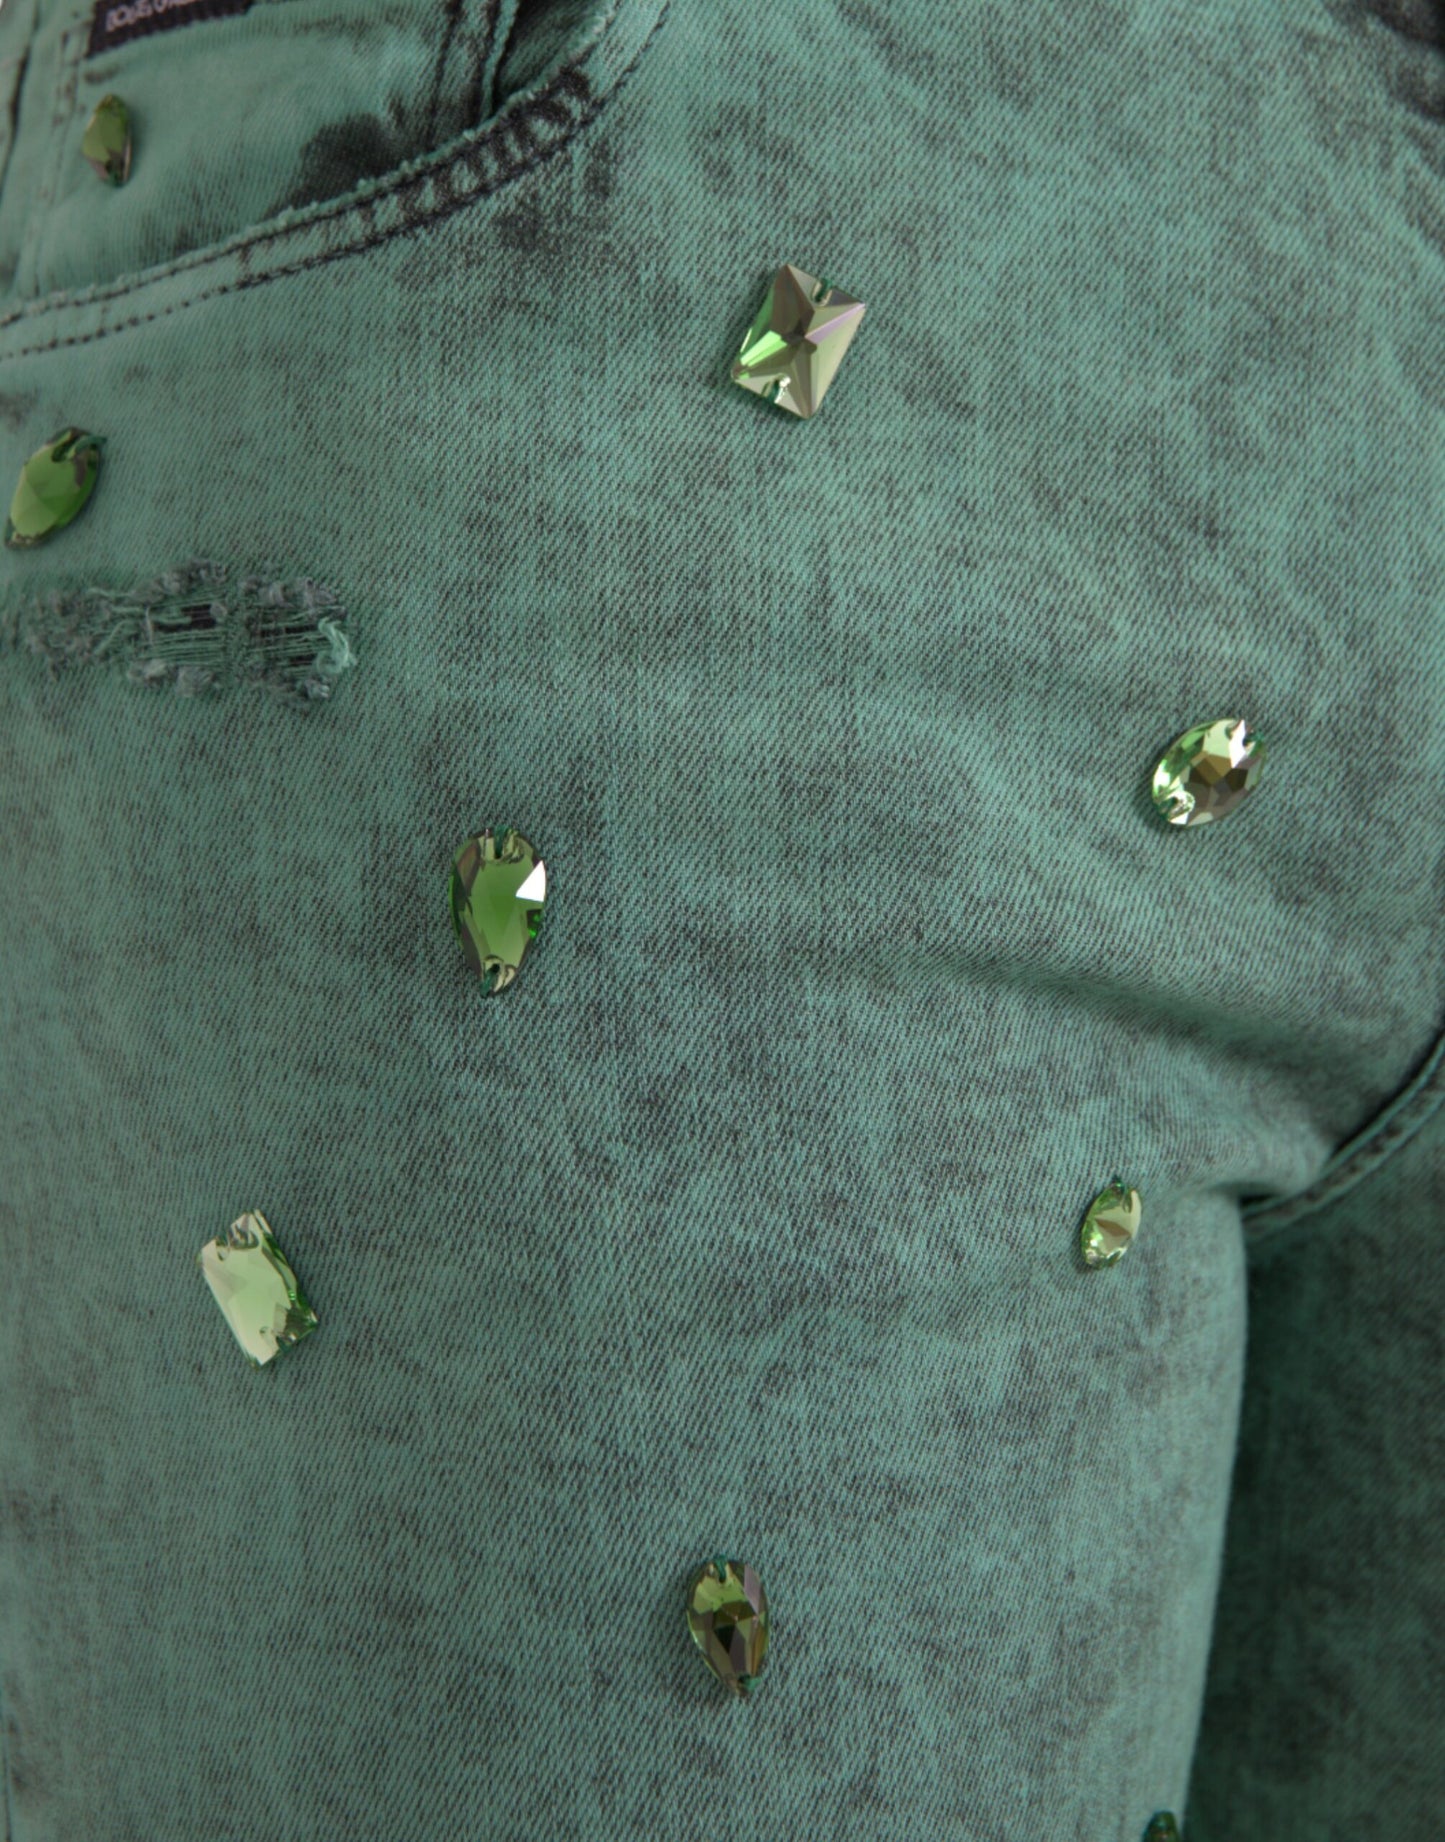 Dolce & Gabbana Green Crystals Cotton Stretch Slim Jeans